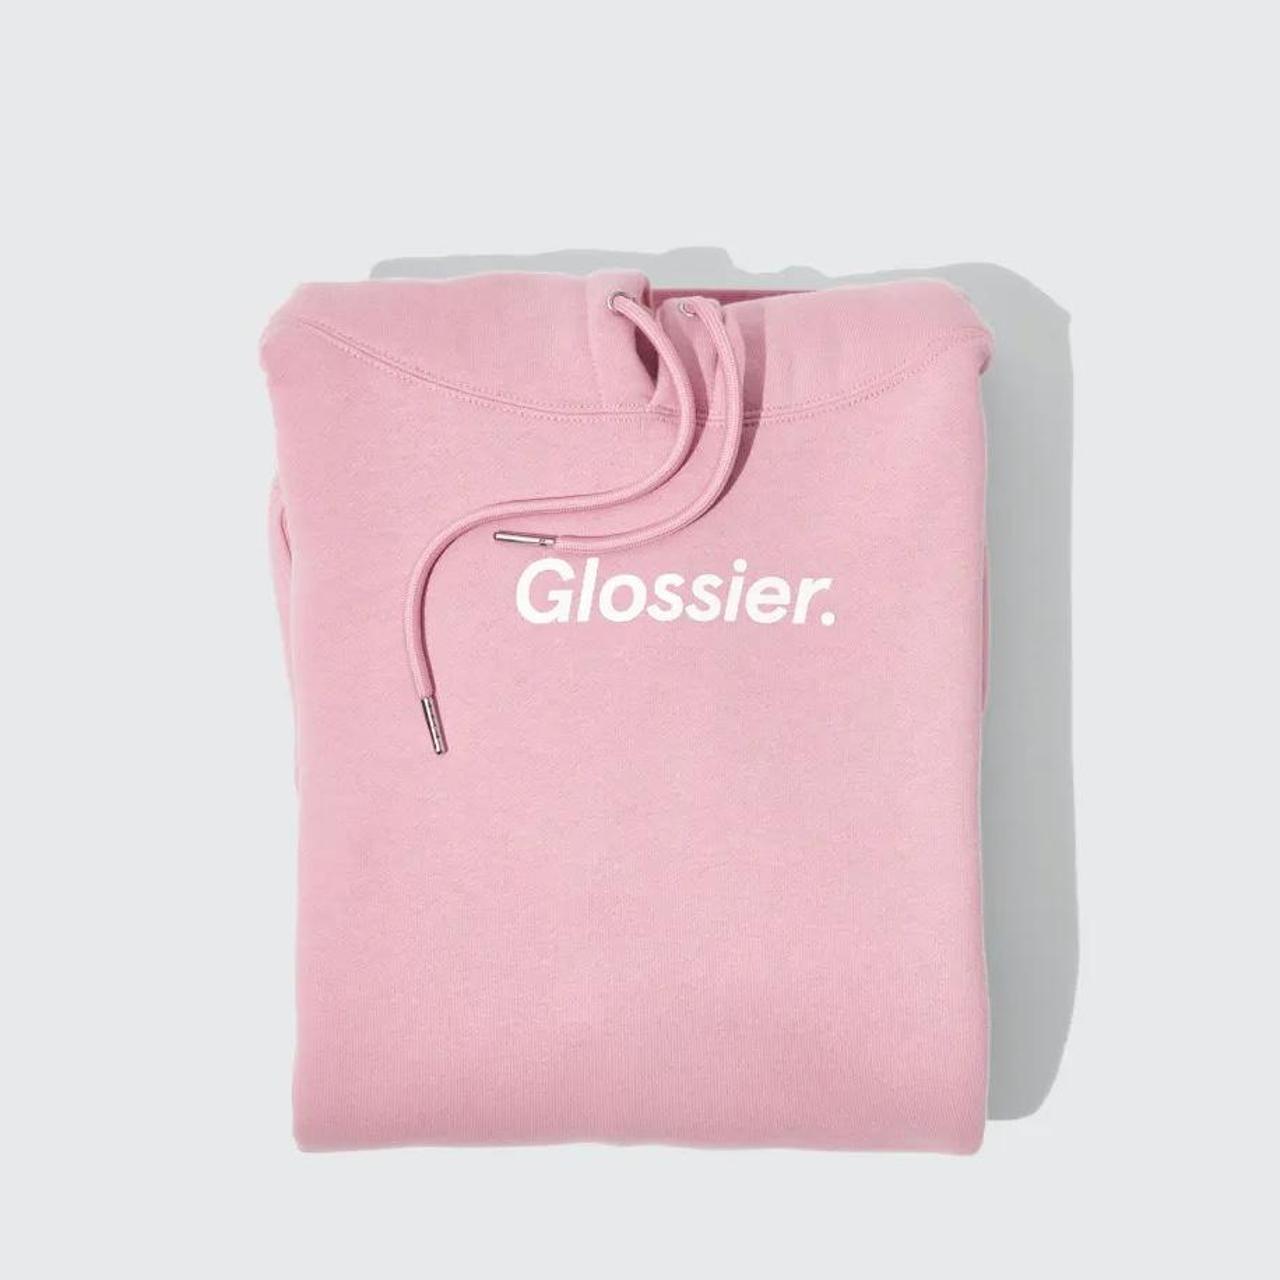 Glossier Women's Pink Sweatshirt